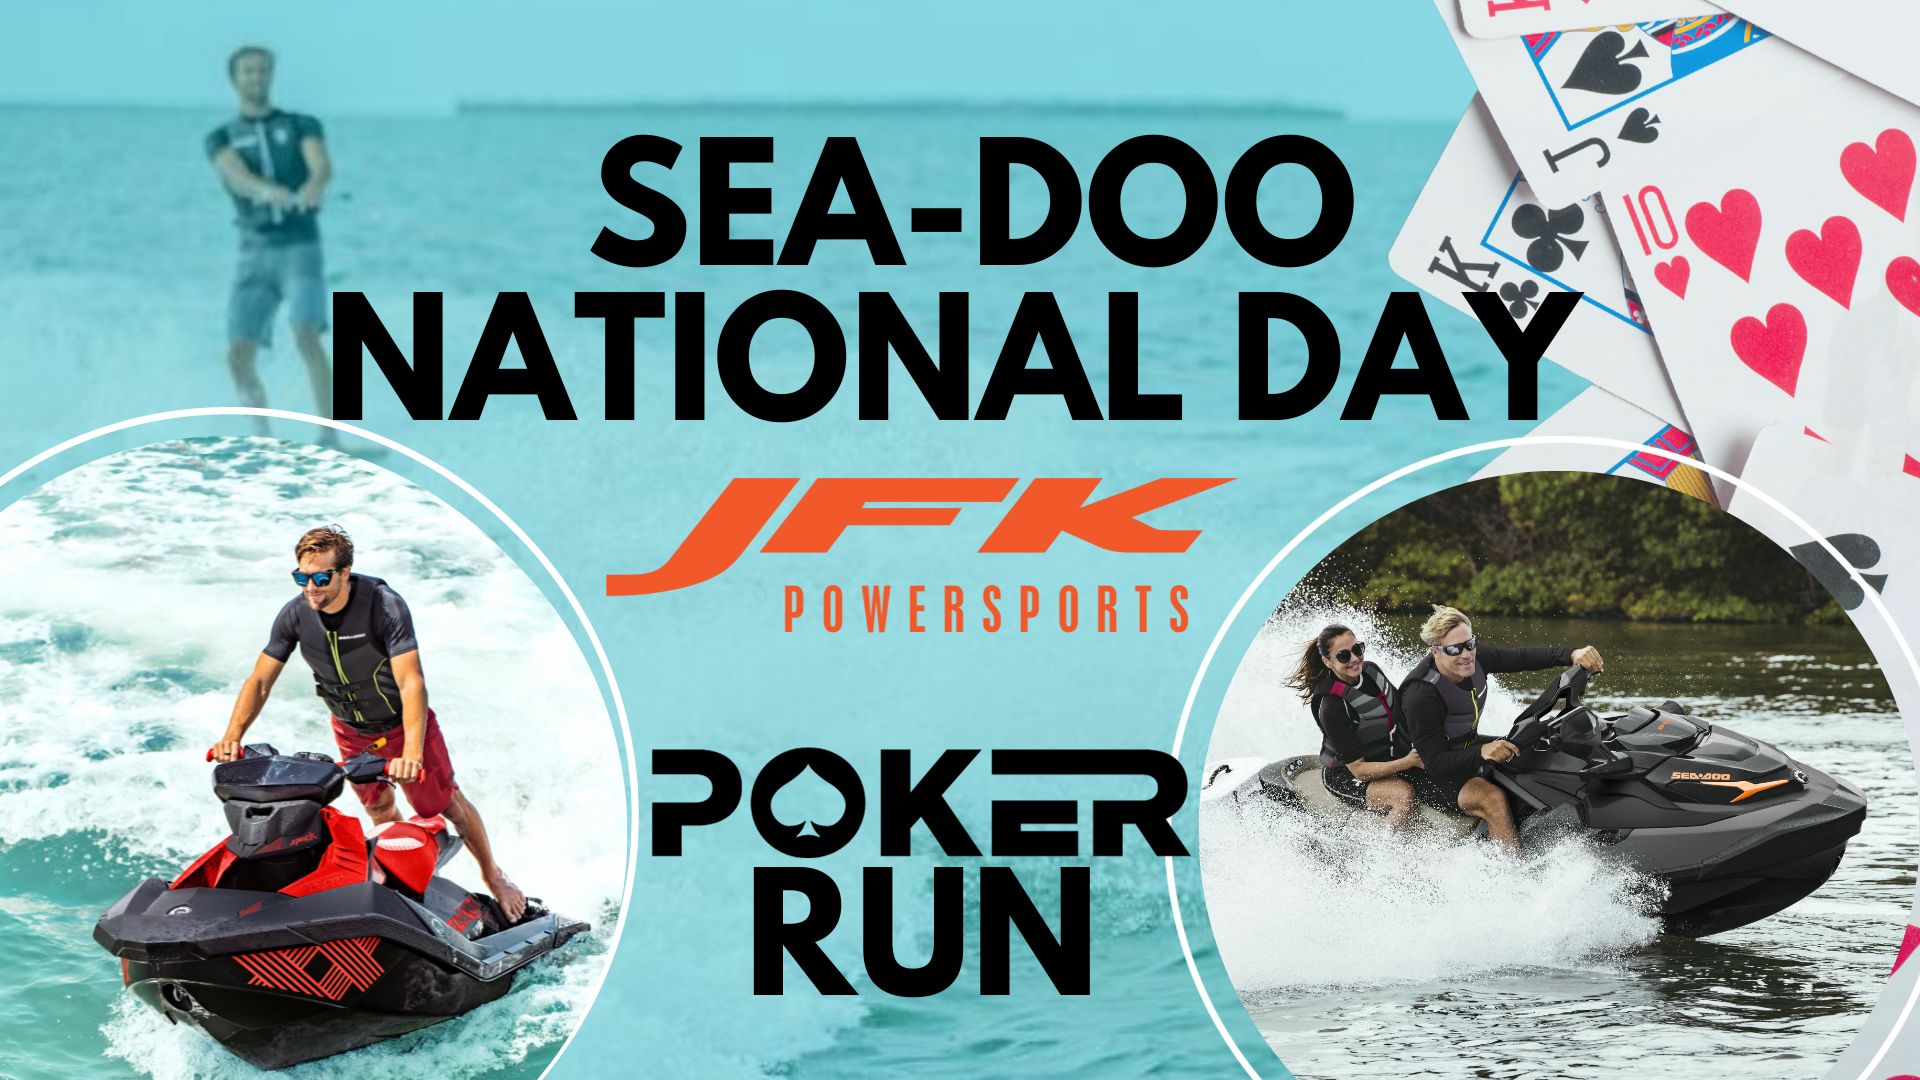 National Sea-Doo Day with JFK Powersports